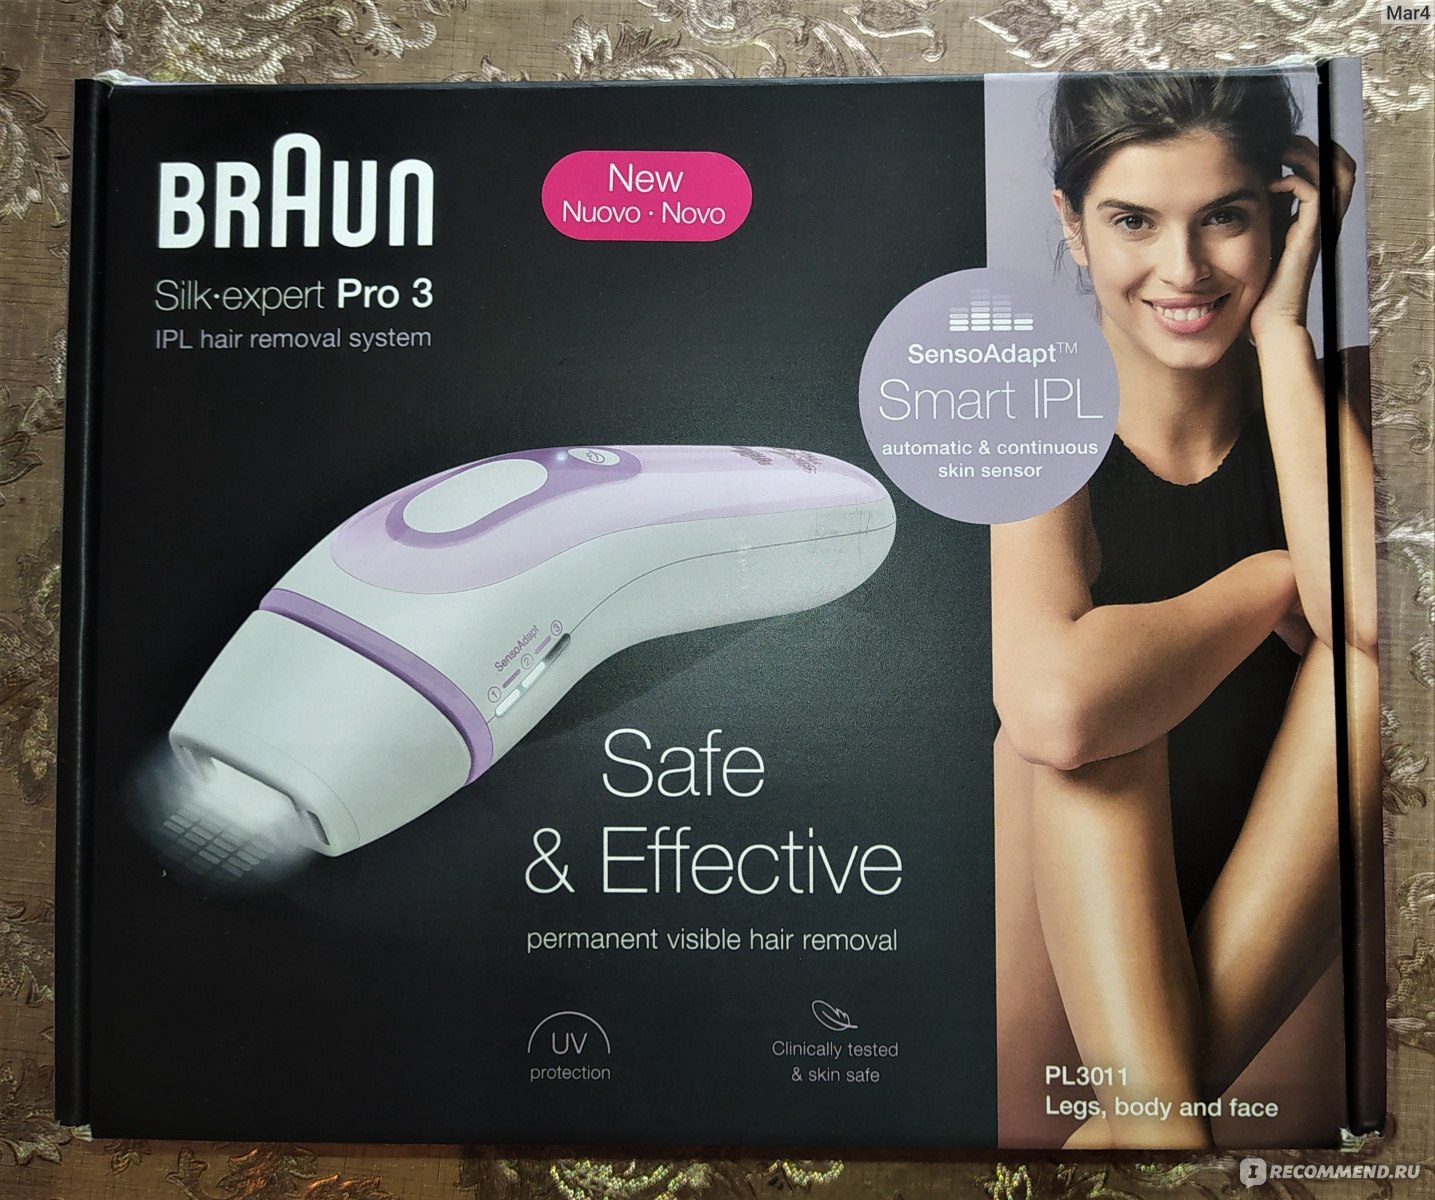 Braun Silk-expert Pro 3 IPL PL3011